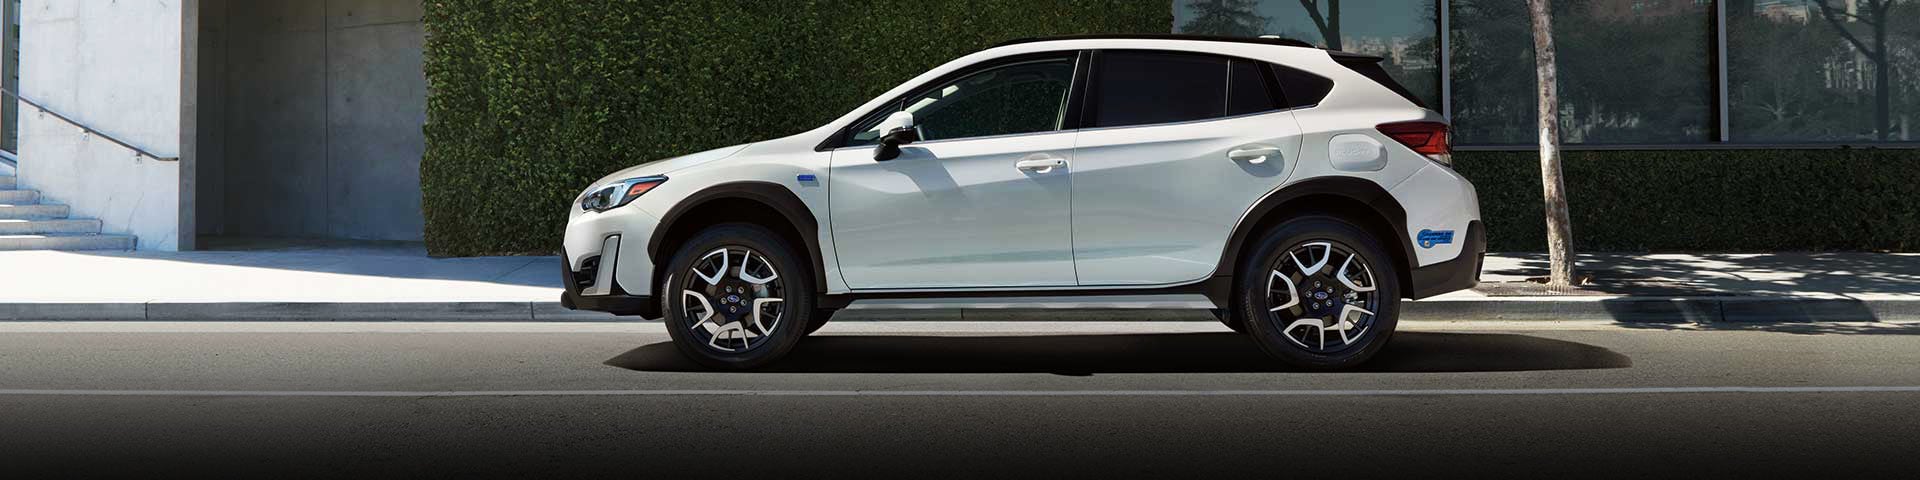 The side profile of a white Subaru Crosstrek Hybrid | Subaru Superstore of Chandler in Chandler AZ